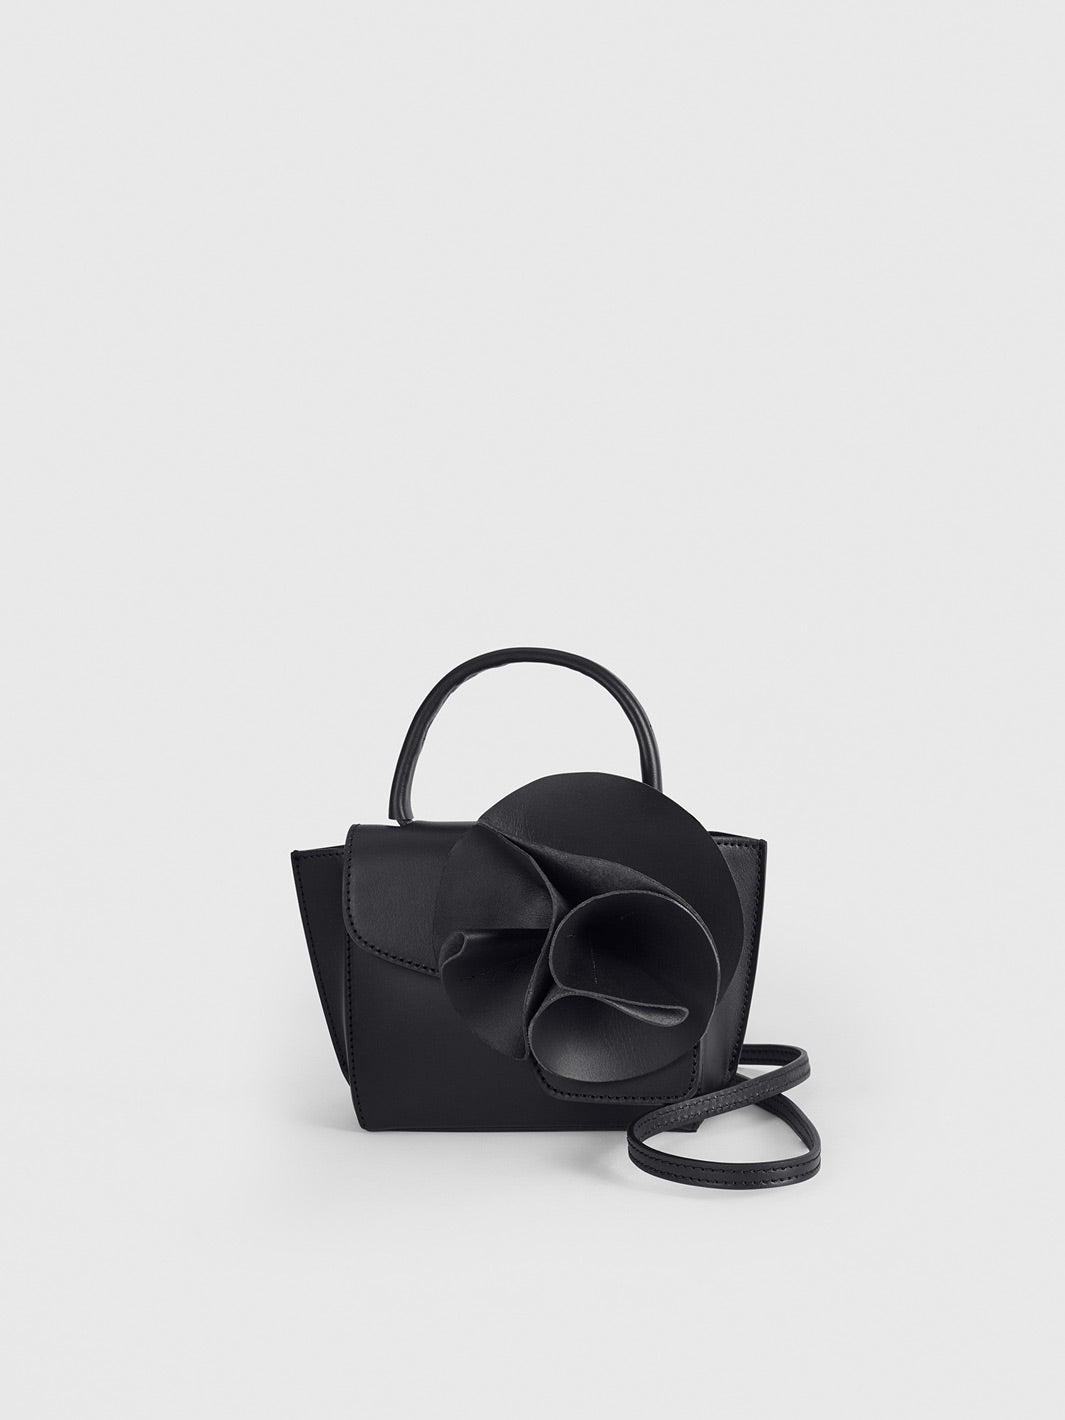 Handbags | ATP Atelier Official Store